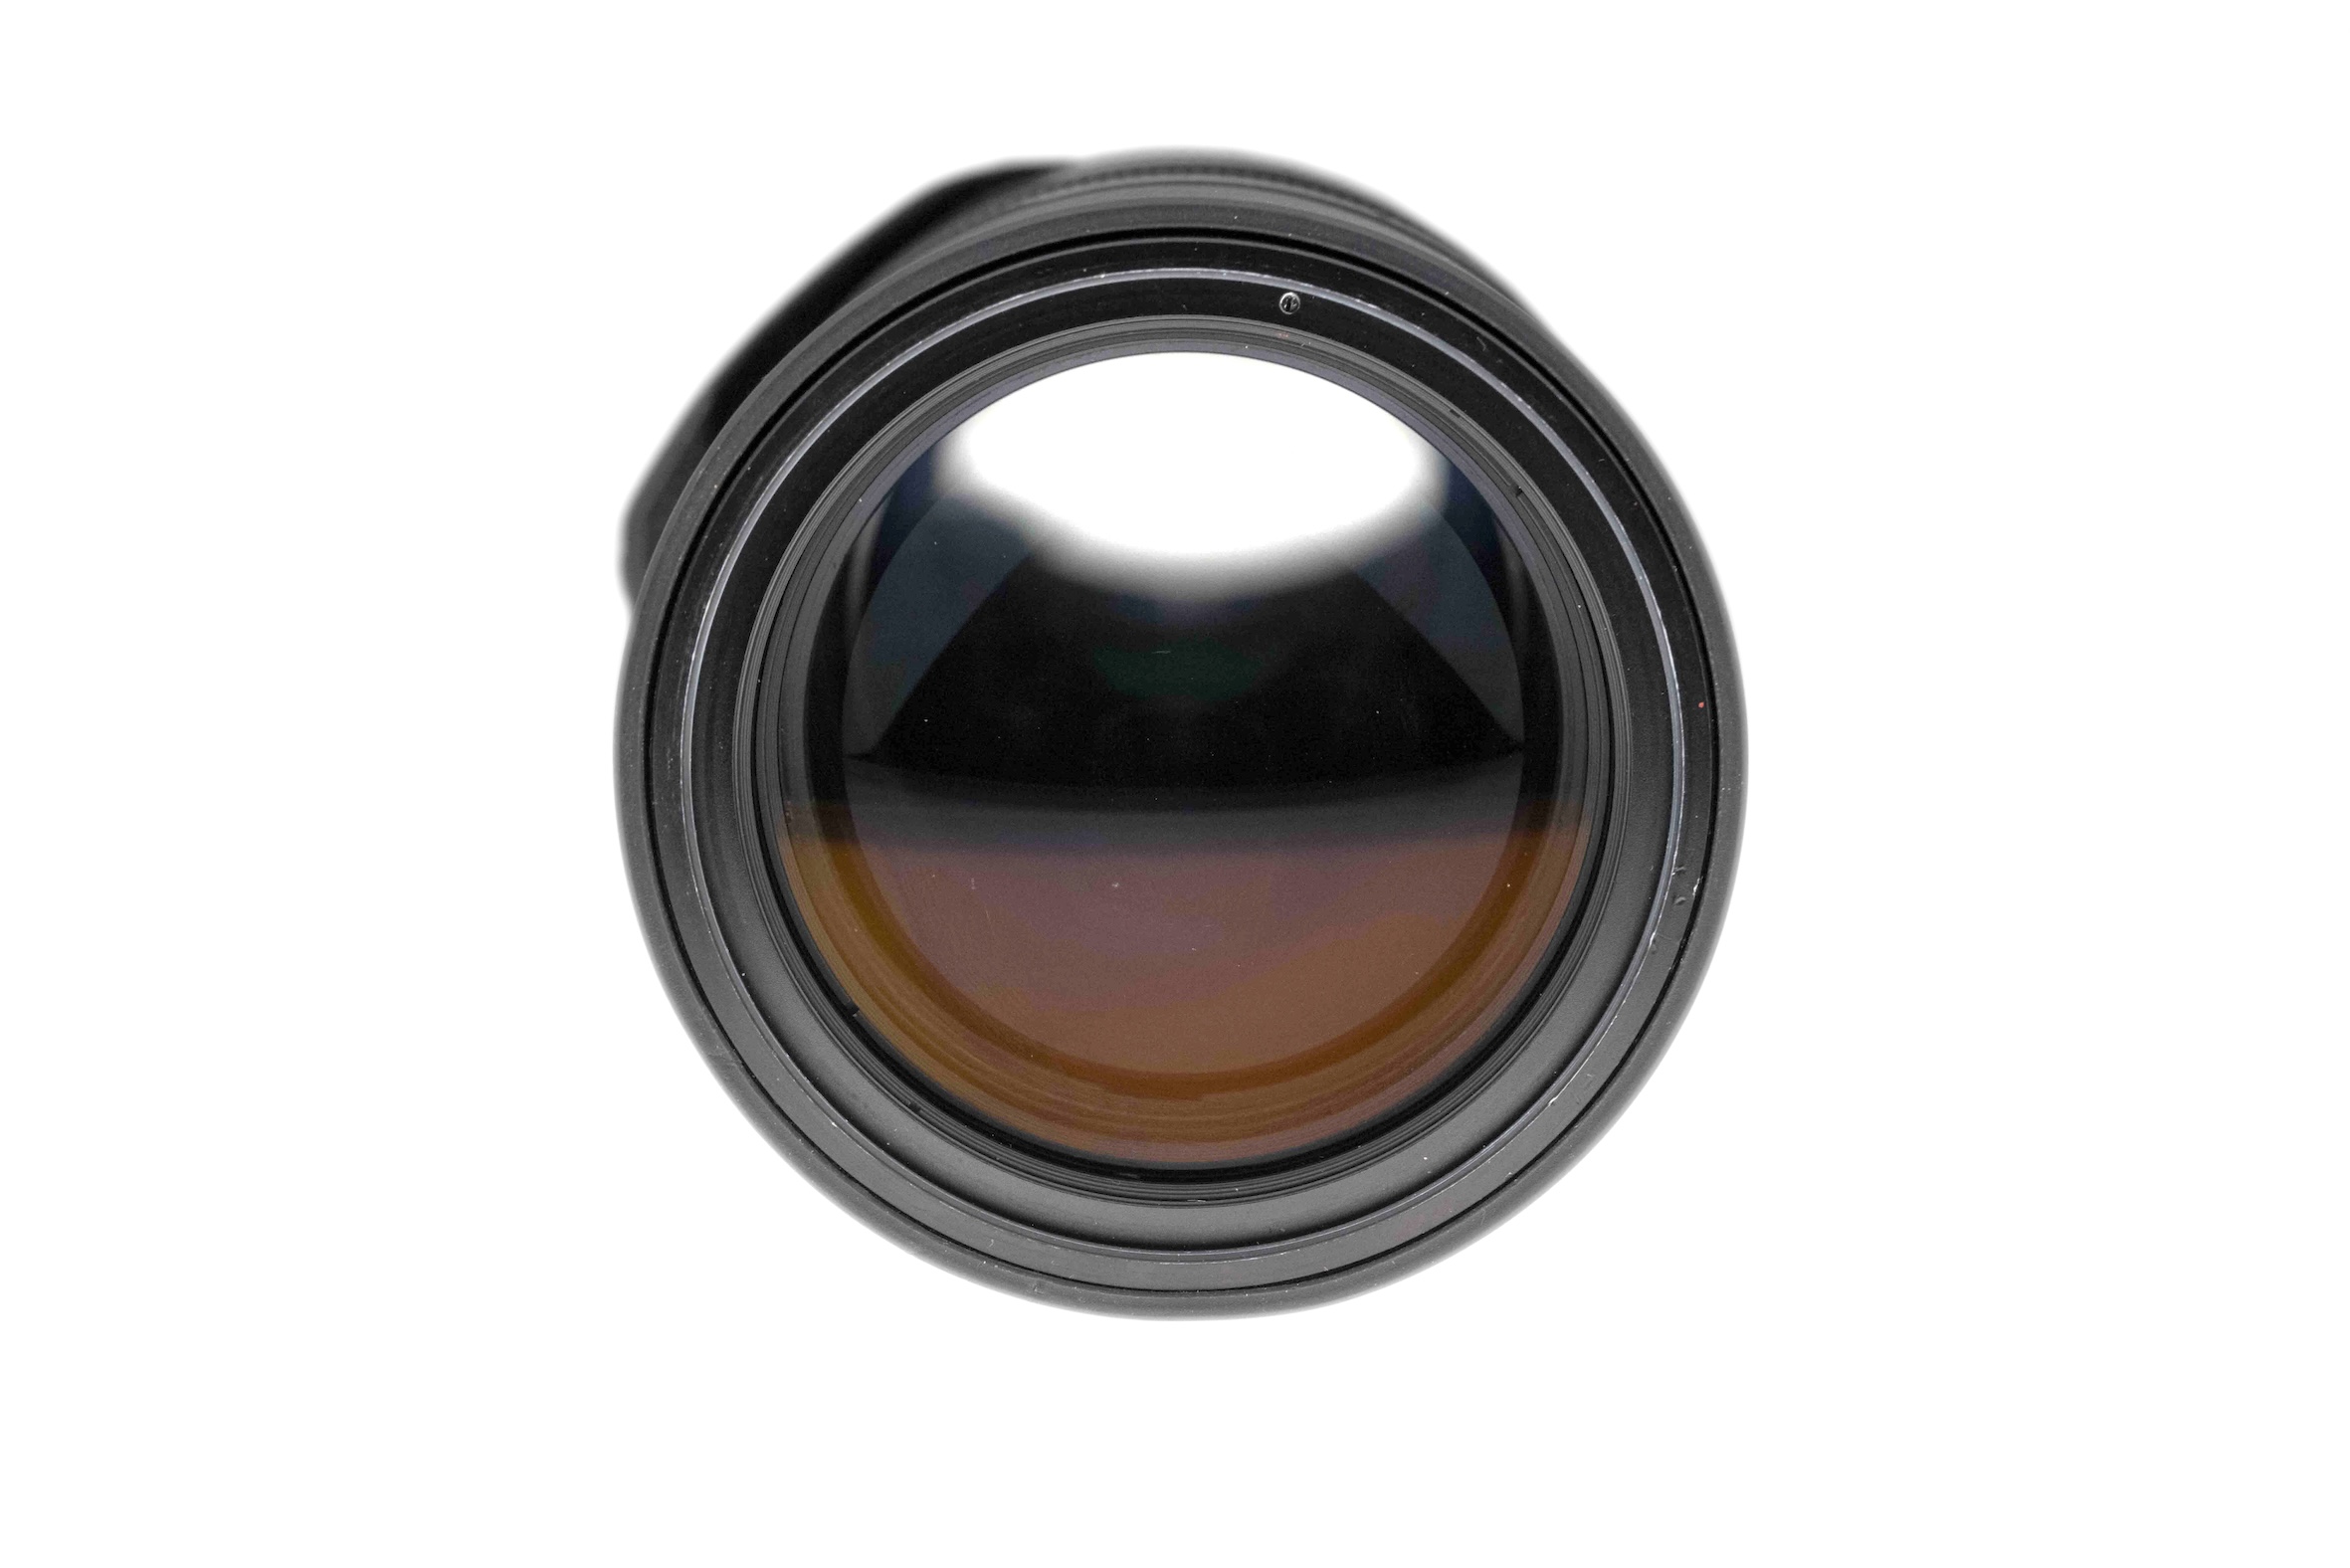  Leica Vario-Elmar-R 1:4,2/105-280mm